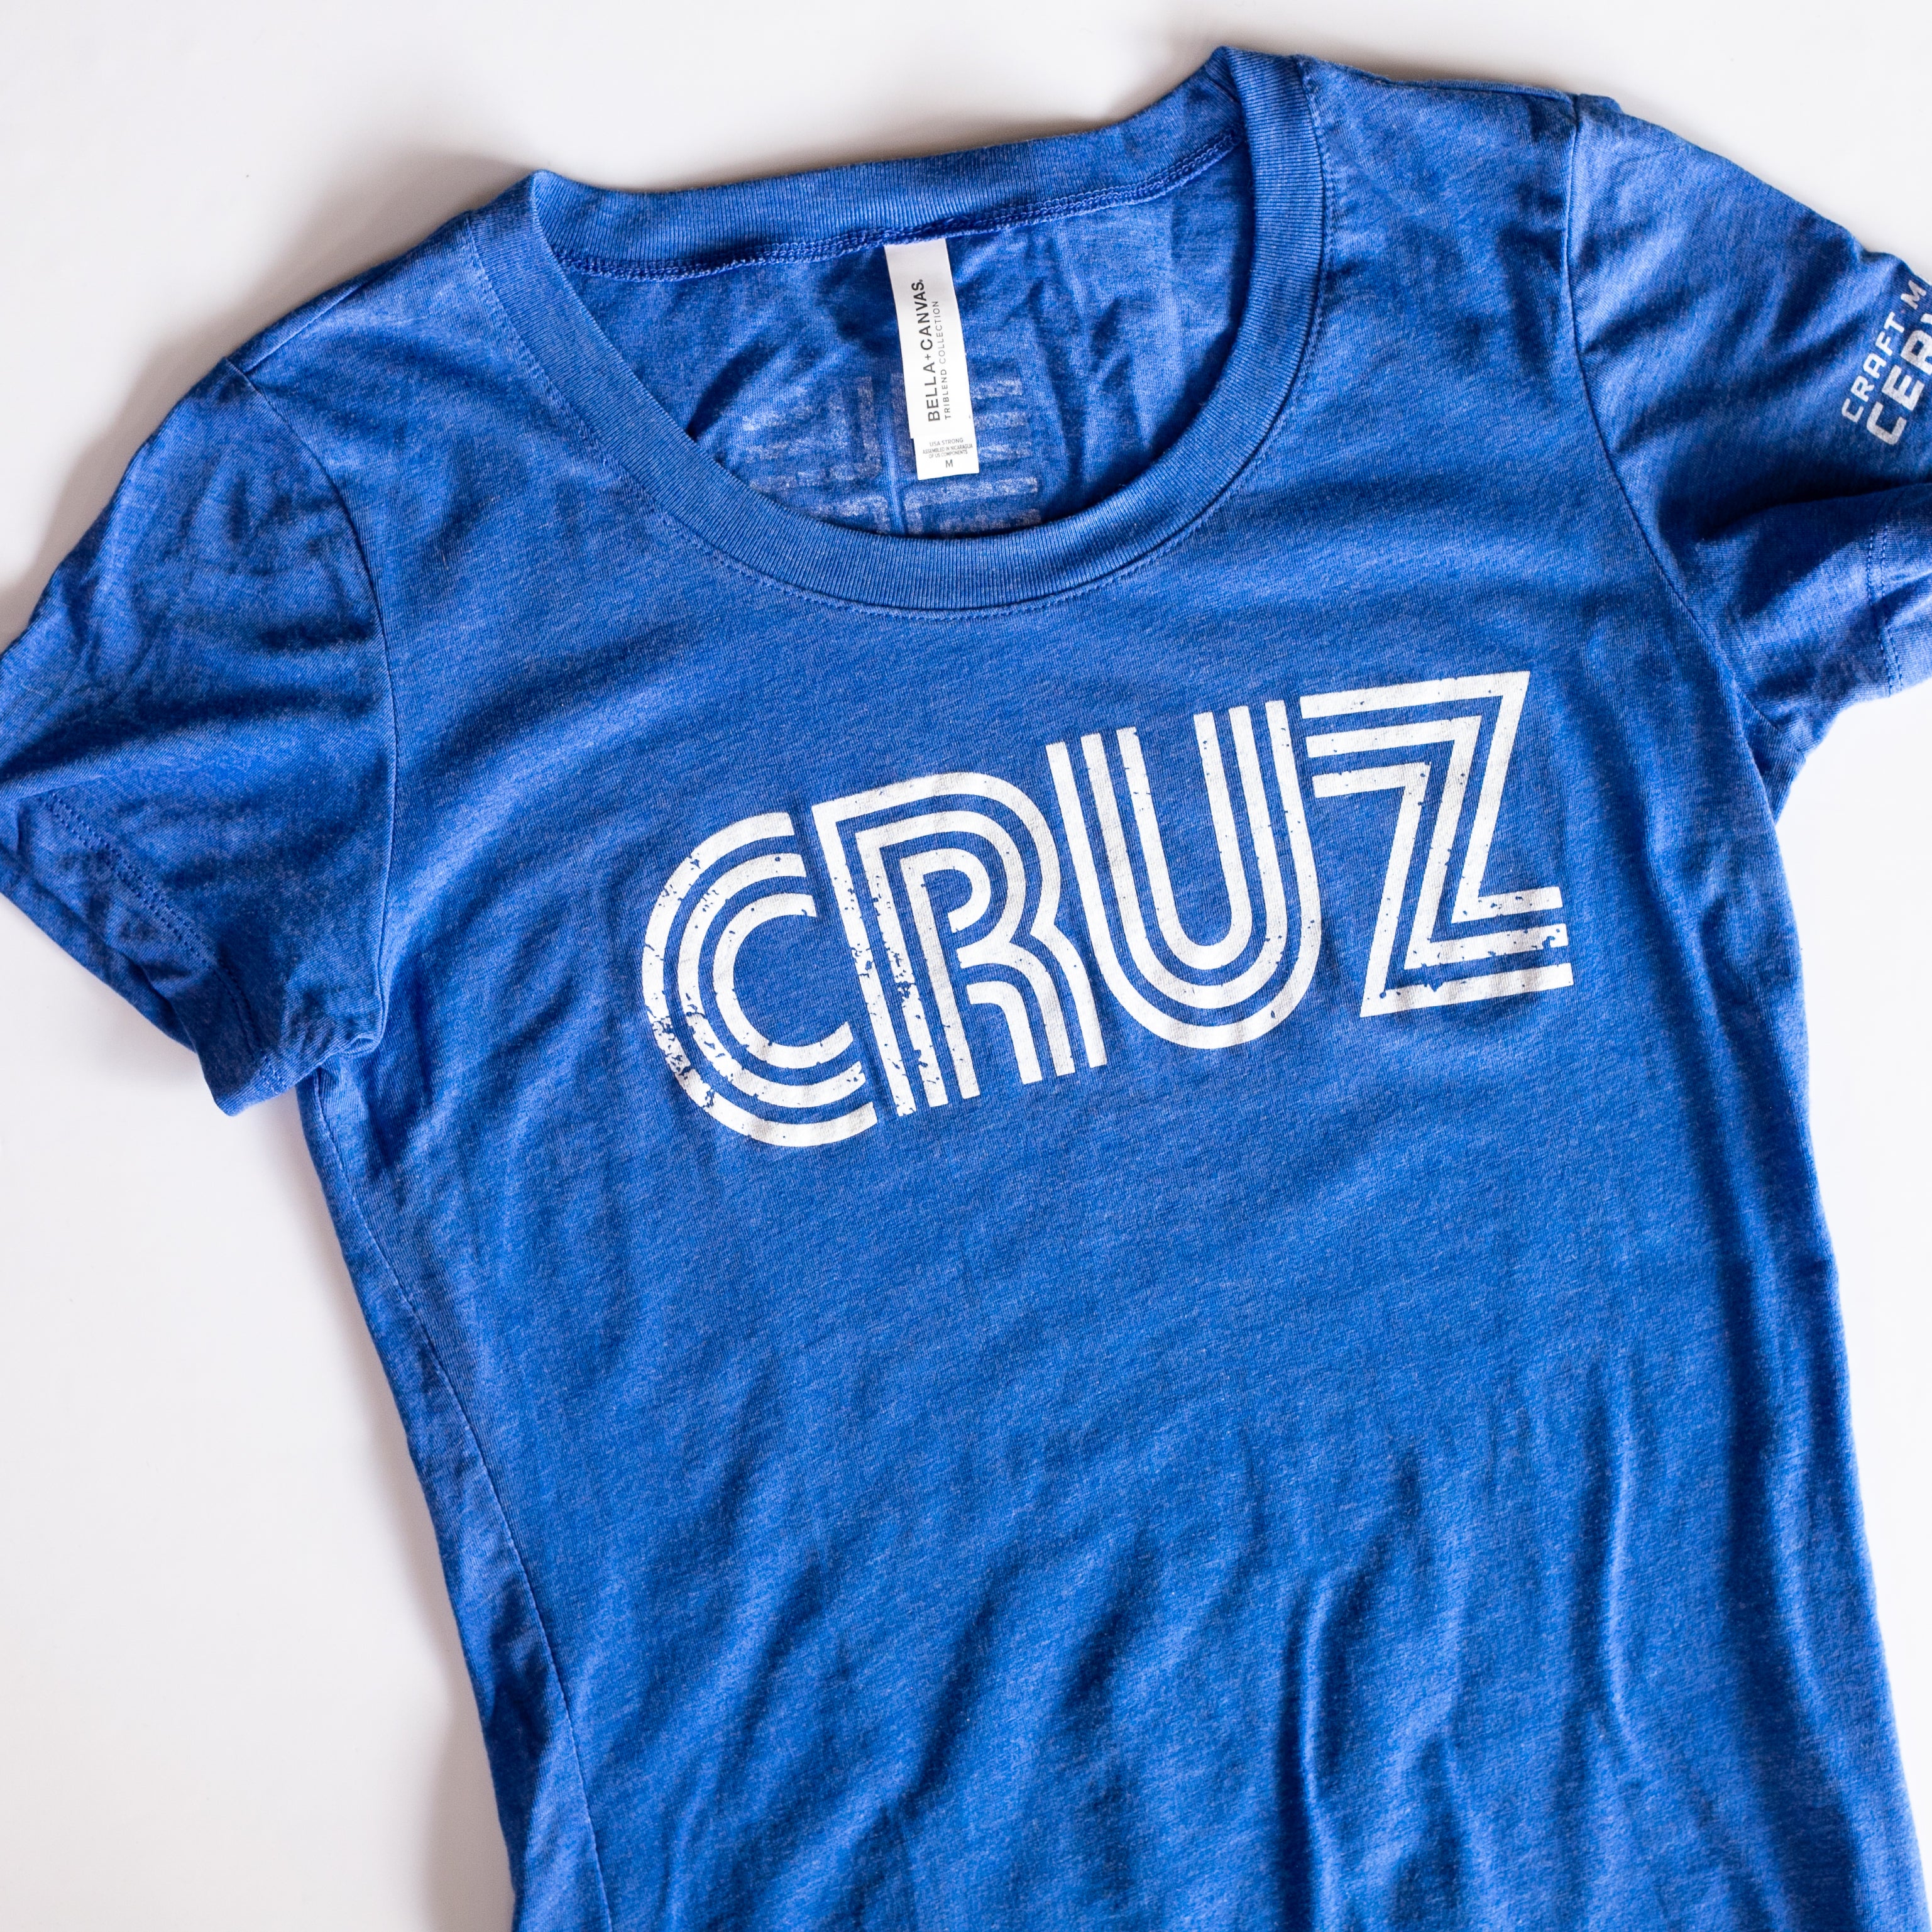 Vintage Cruz T-Shirt